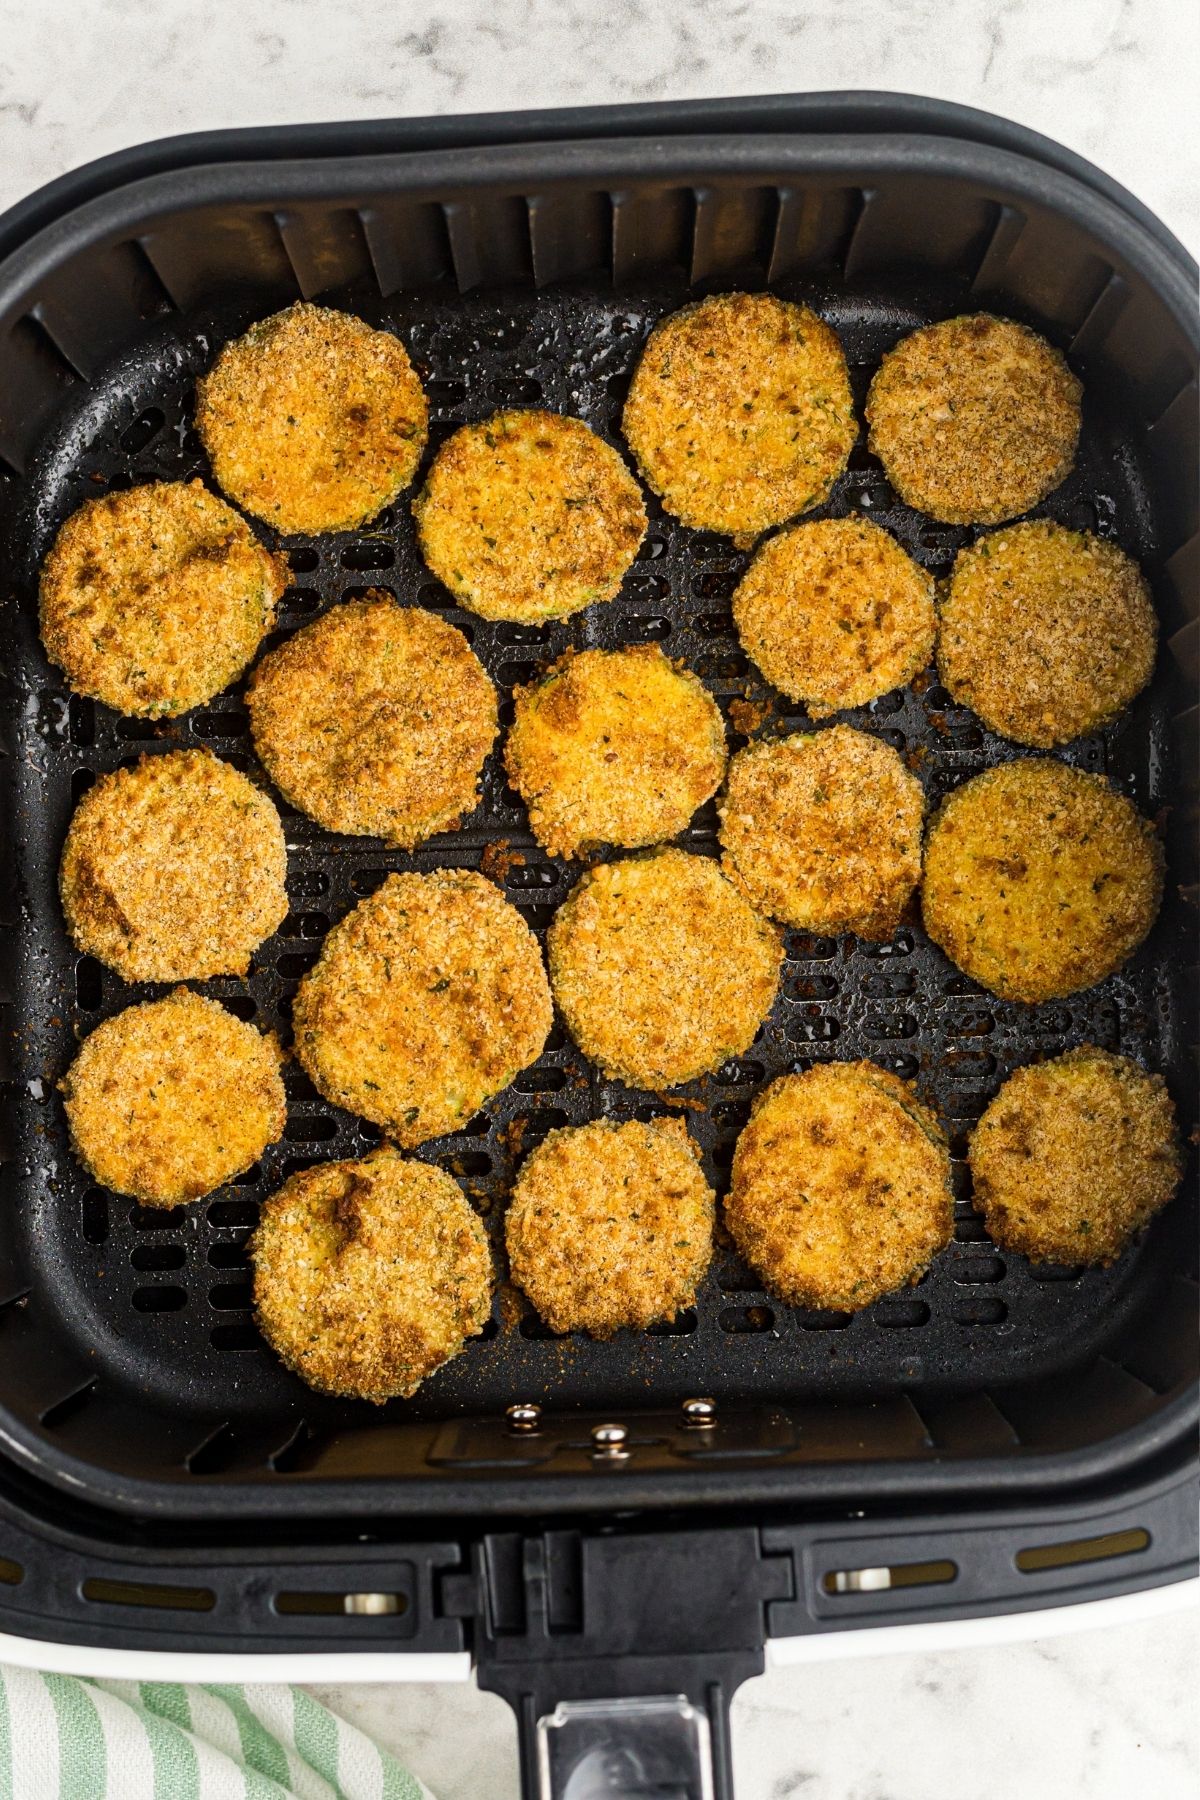 Golden crispy fried zucchini in the air fryer basket